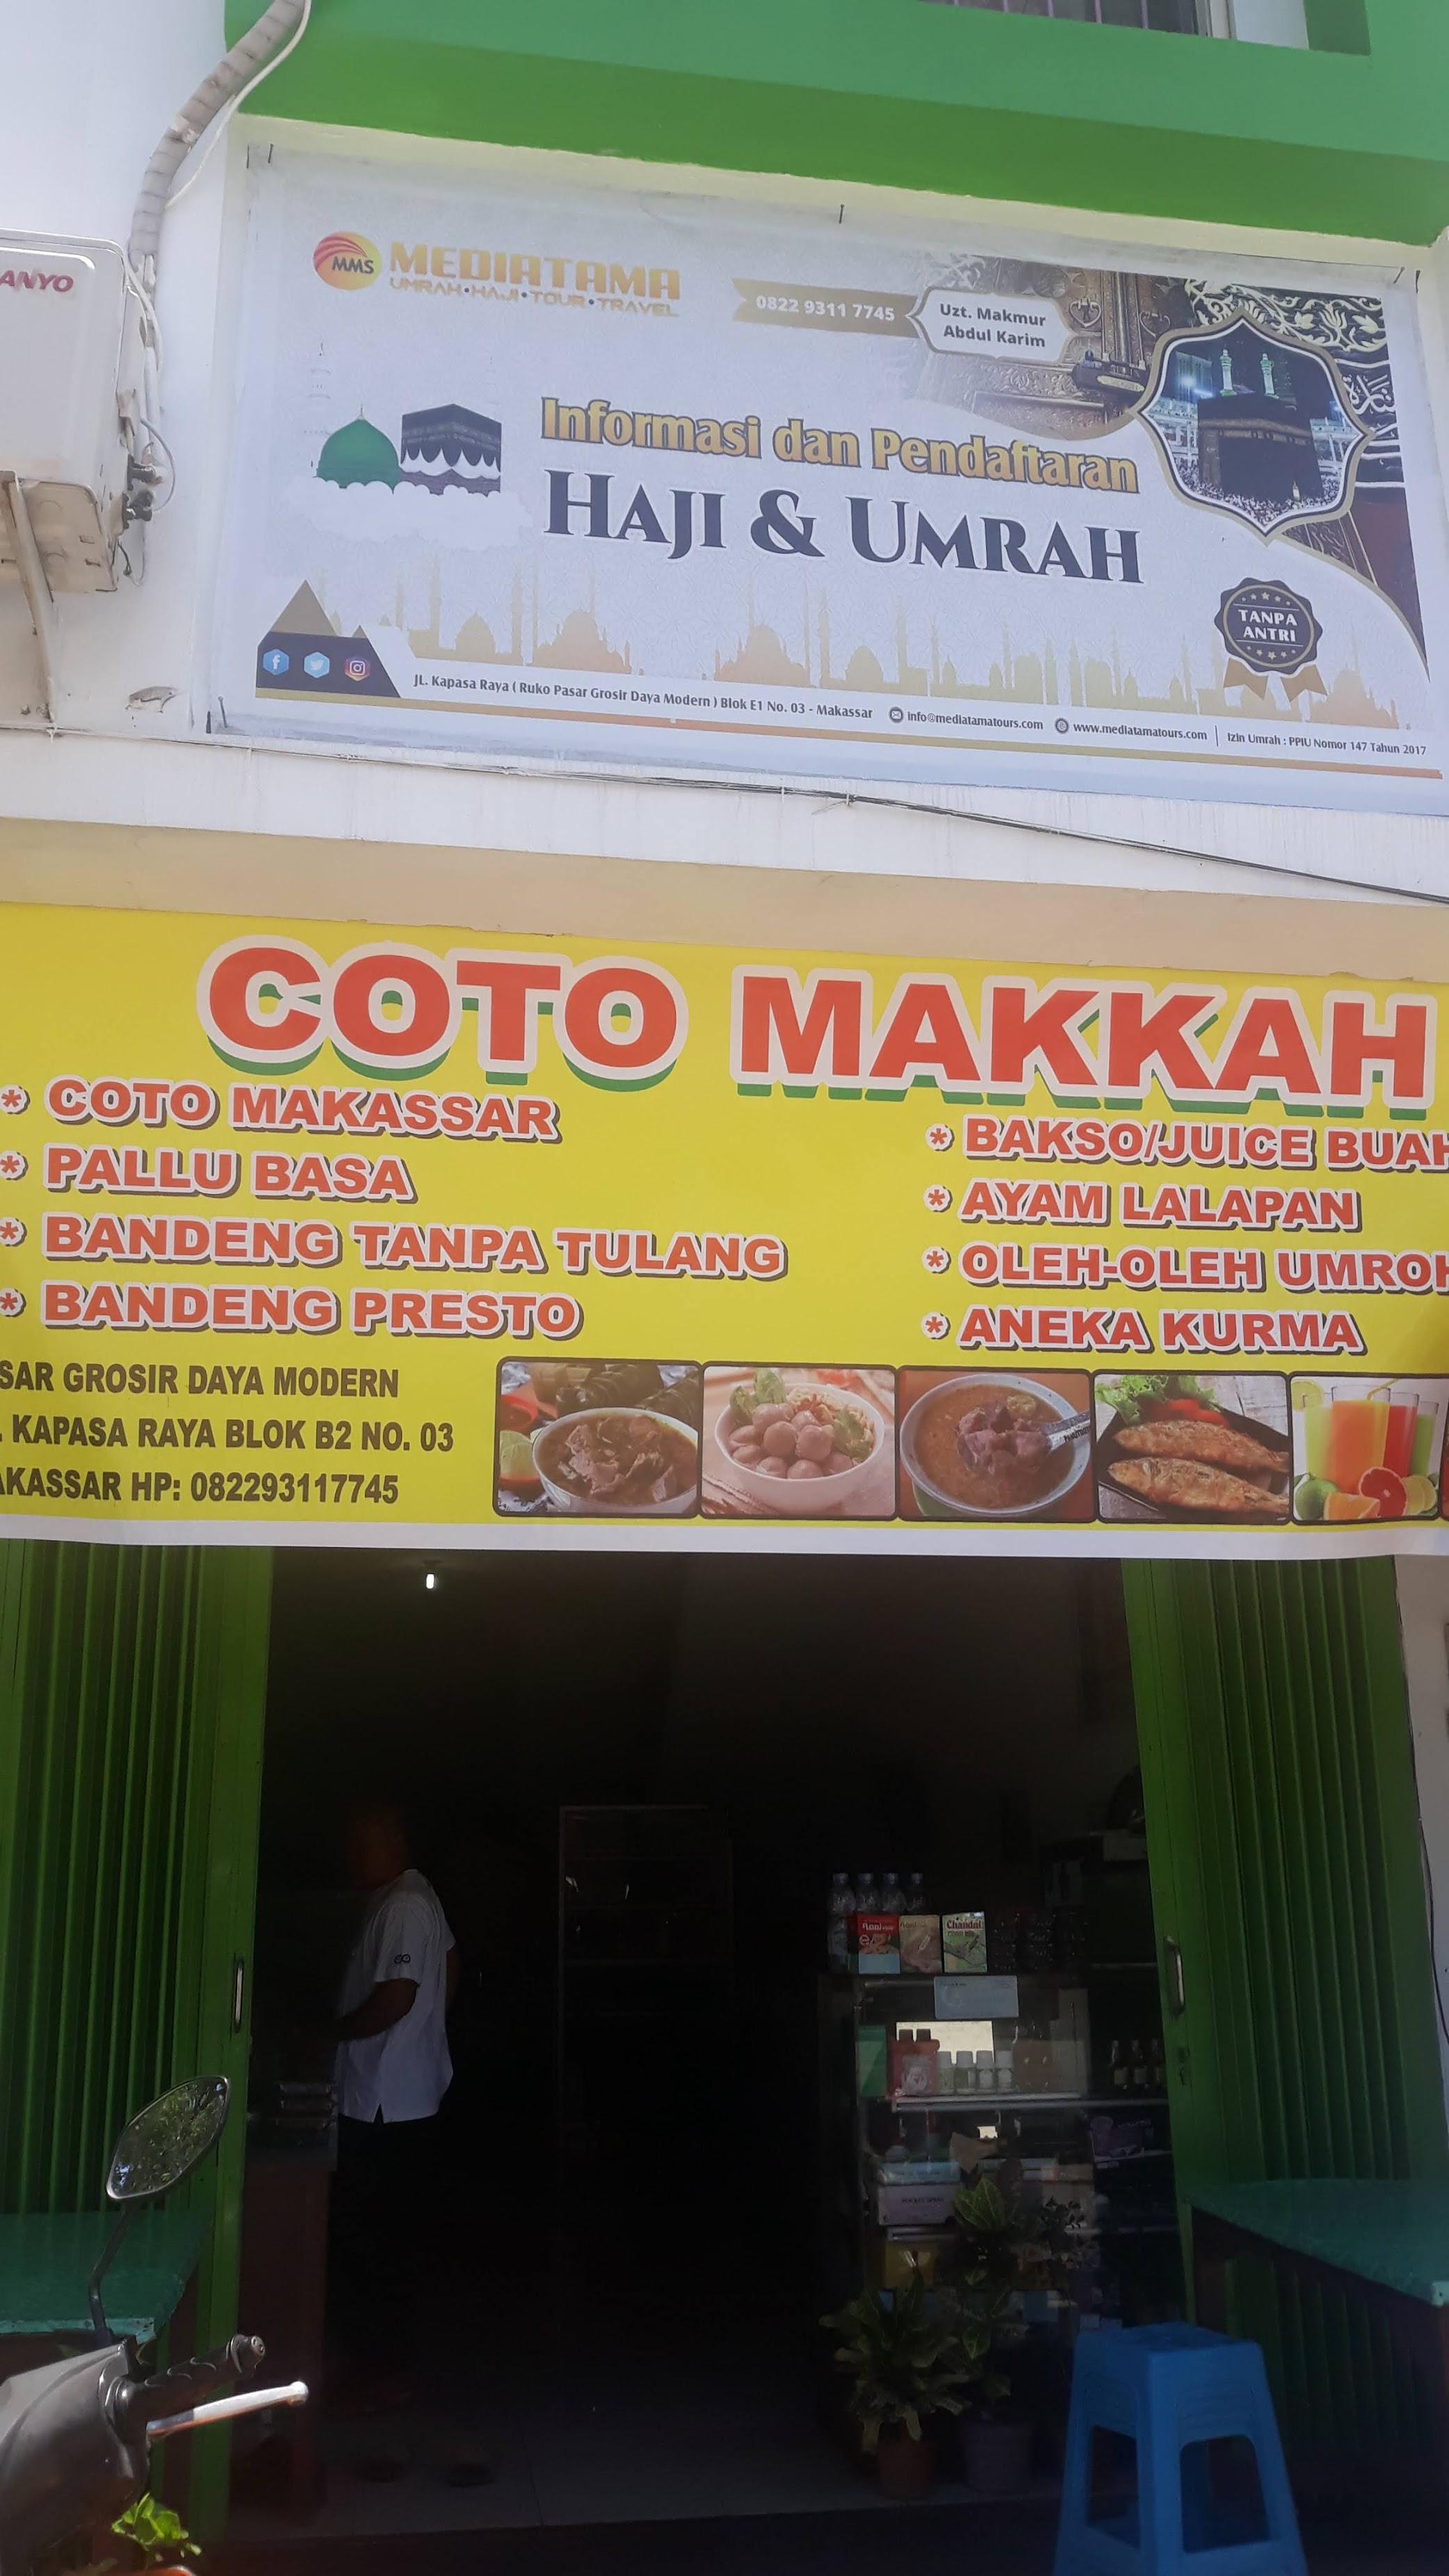 Coto Makkah review